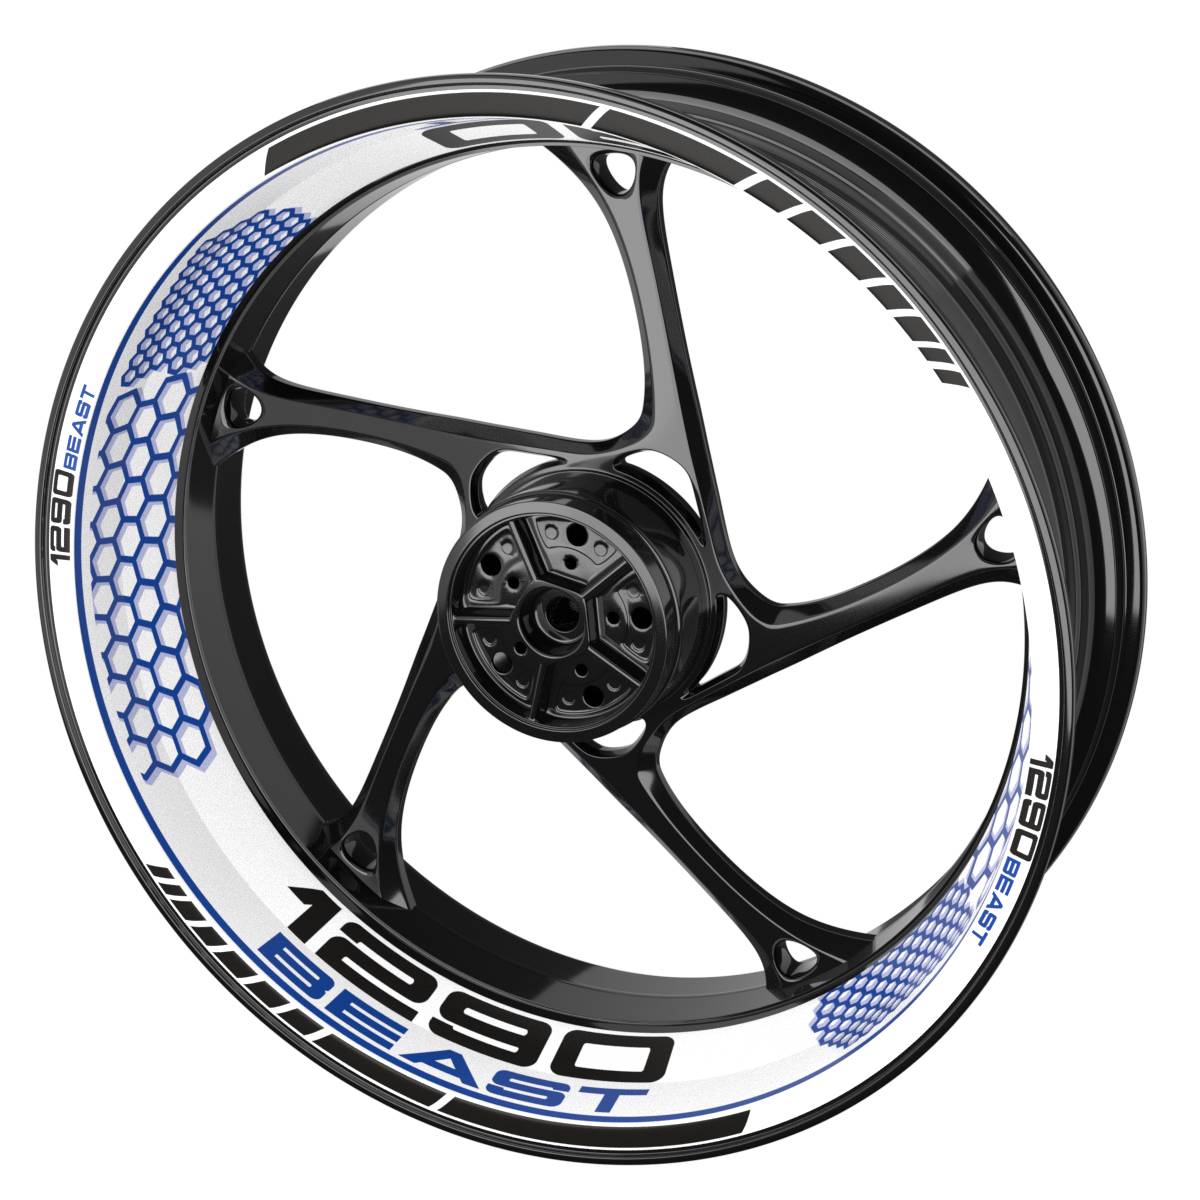 Felgenaufkleber für KTM 1290 Beast Felgenaufkleber Hexagon weiss Wheelsticker Premium